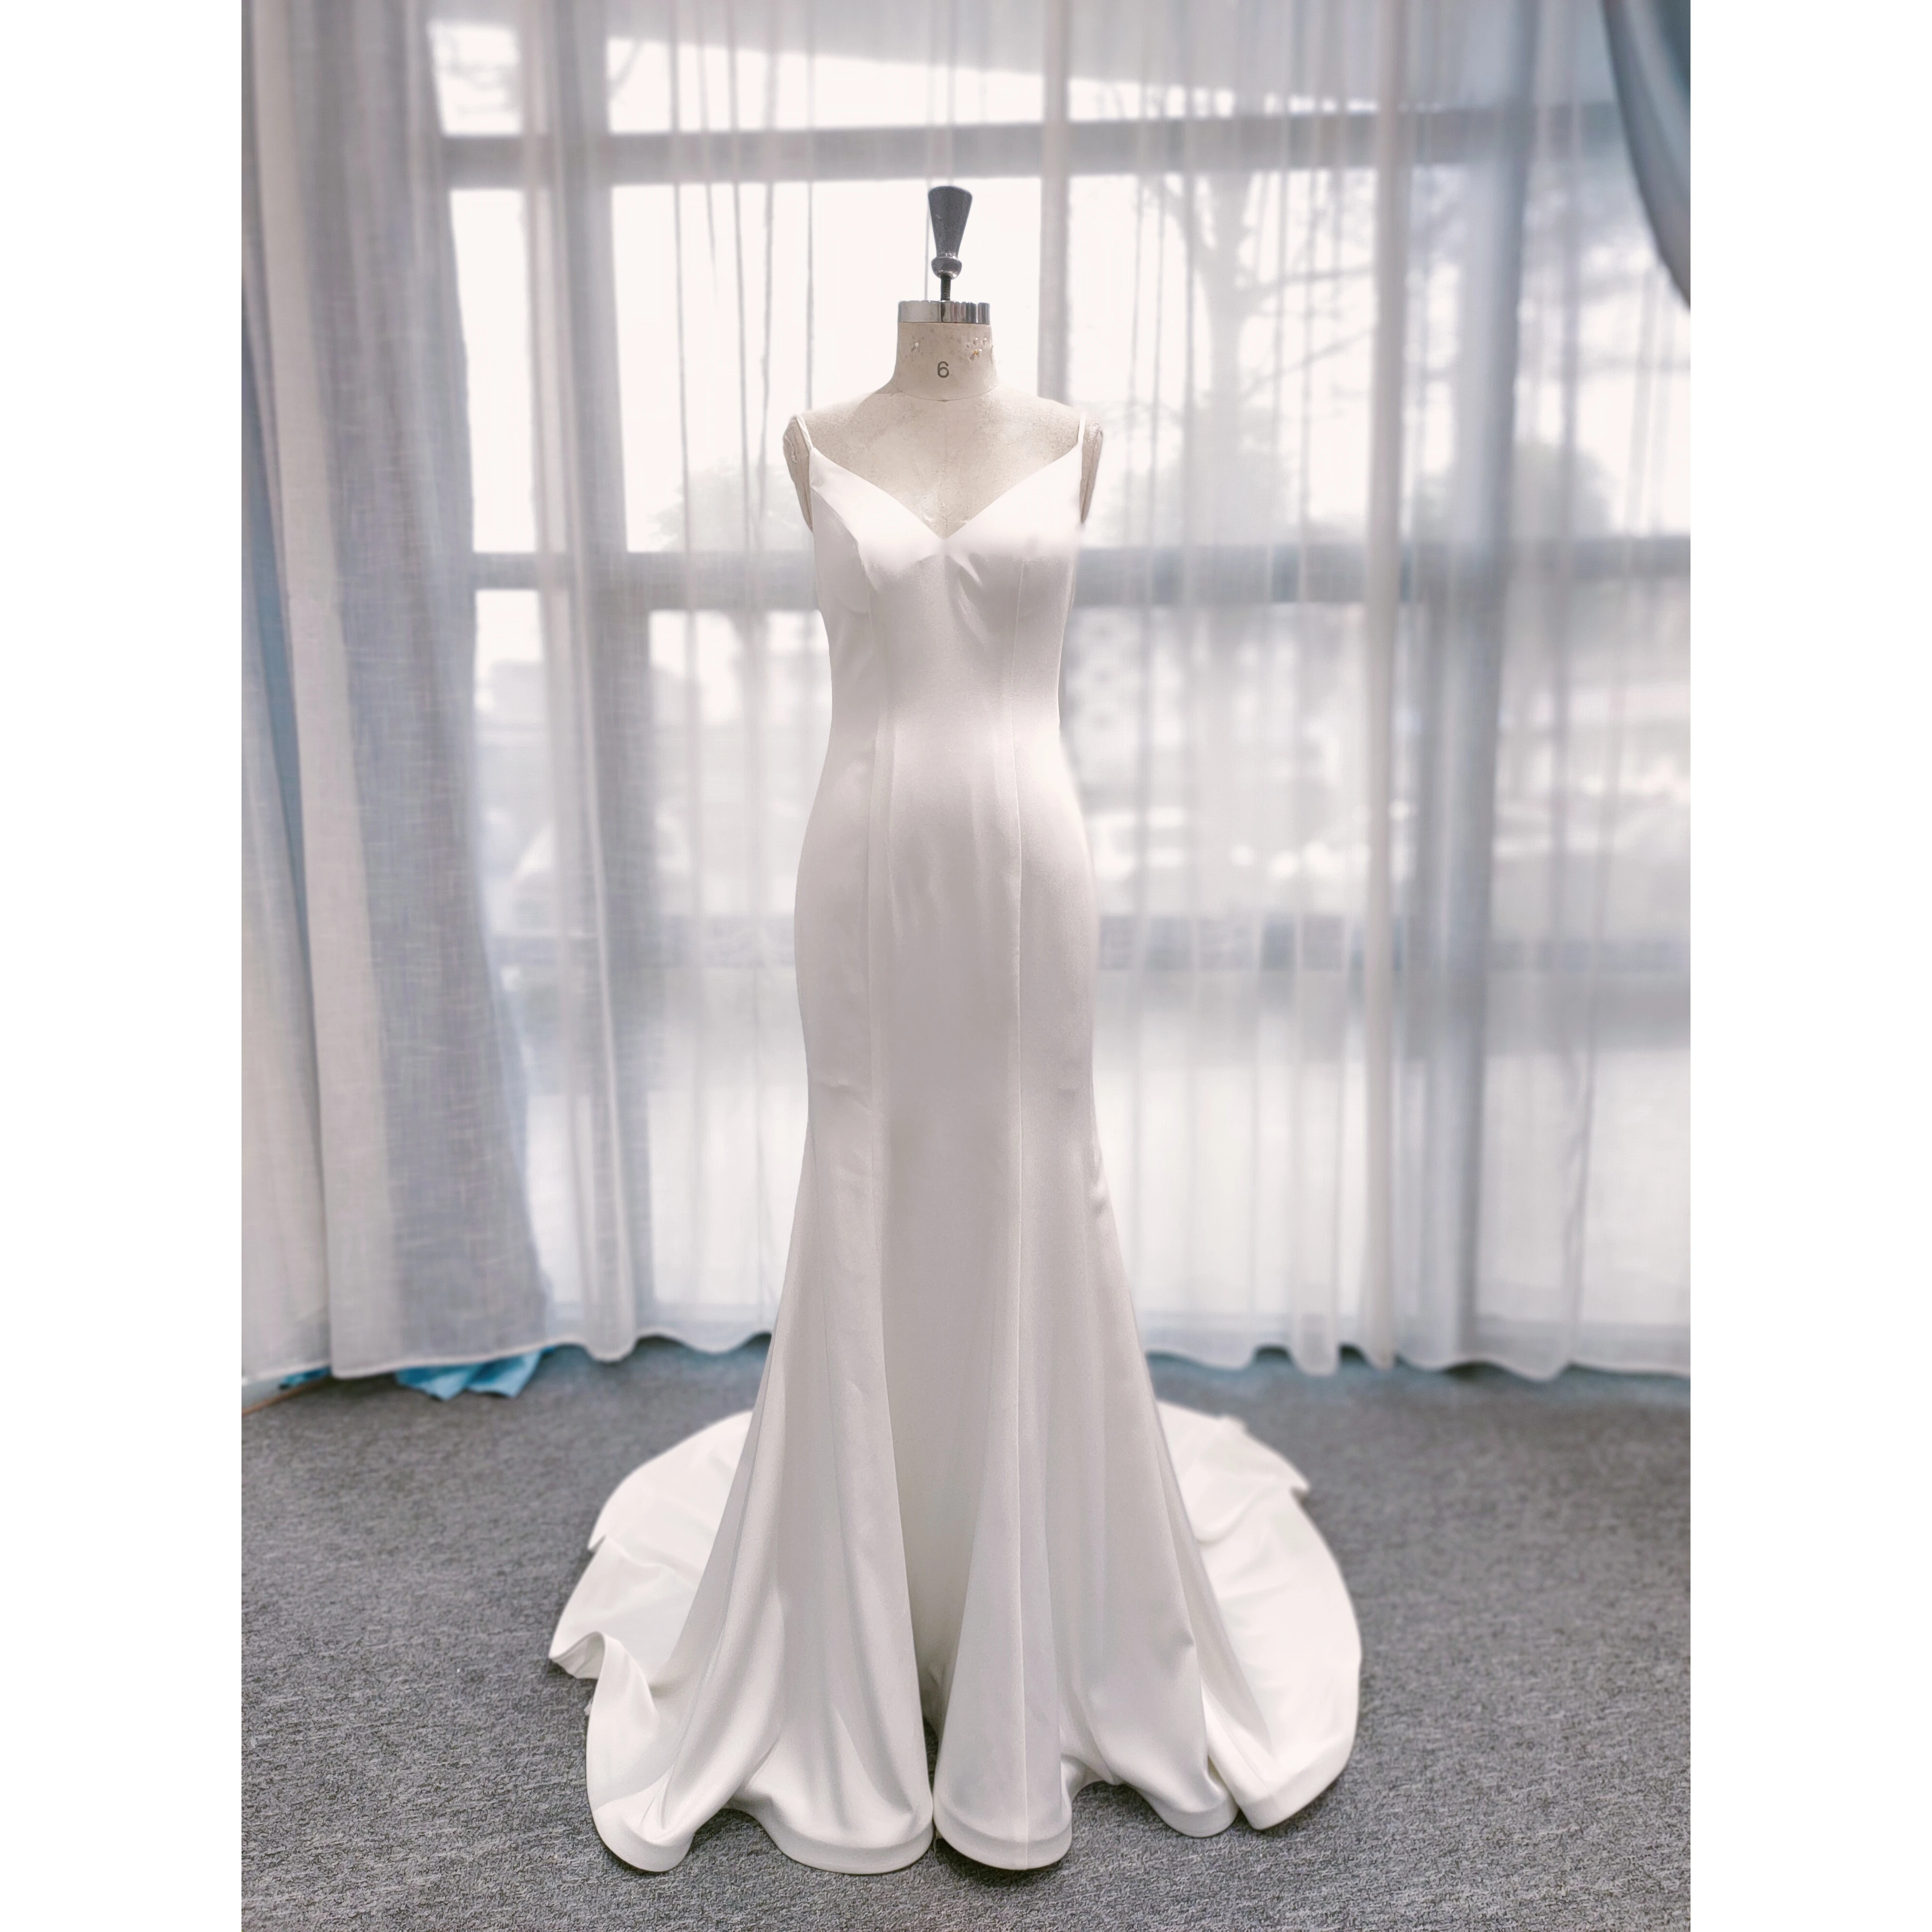 Moonland Satin Hand-made V Neck Backless Mermaid Zipper Long Tail Wedding Dress